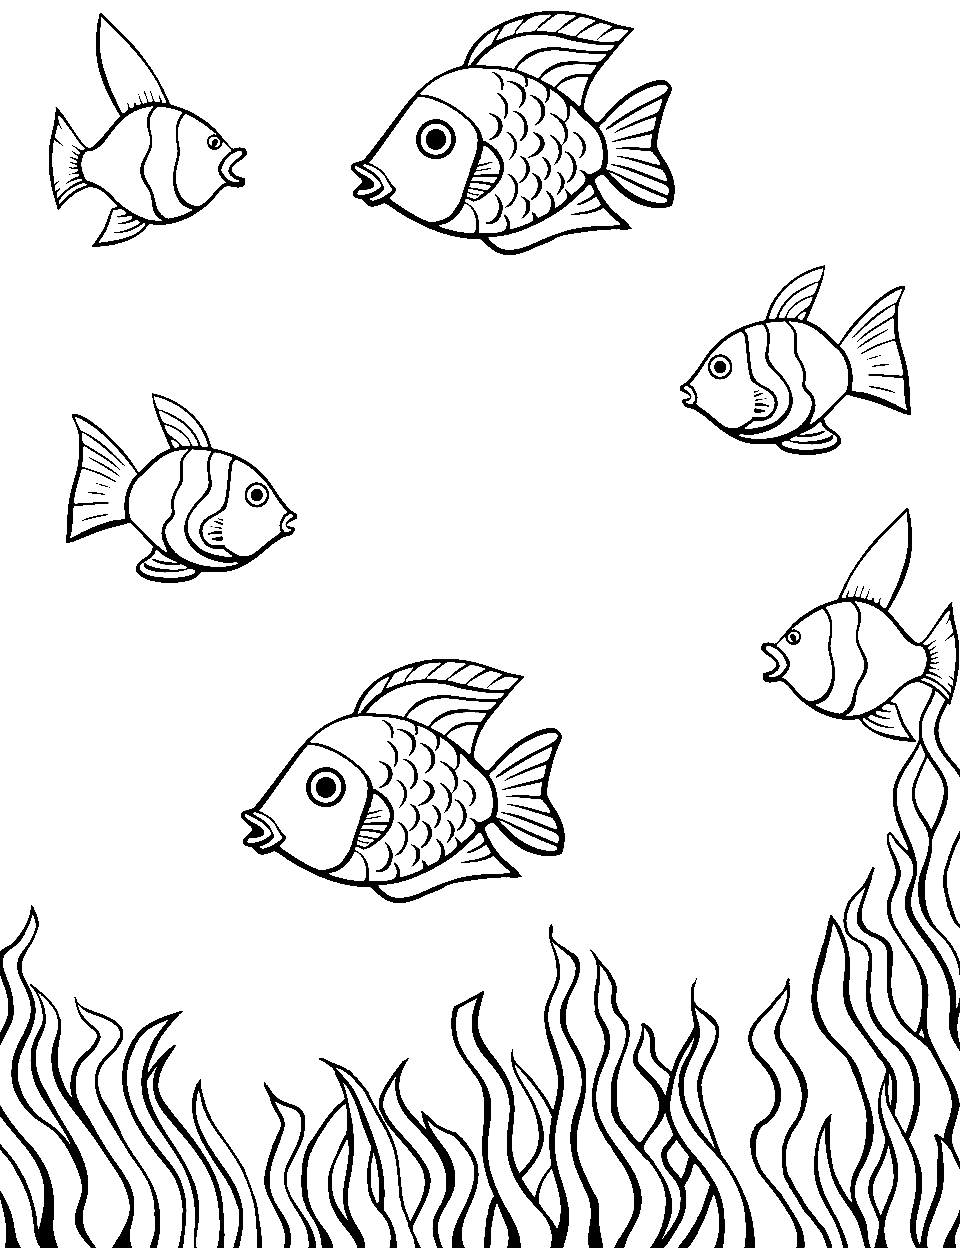 Underwater Utopia Coloring Page - Fish and seaweed underwater.